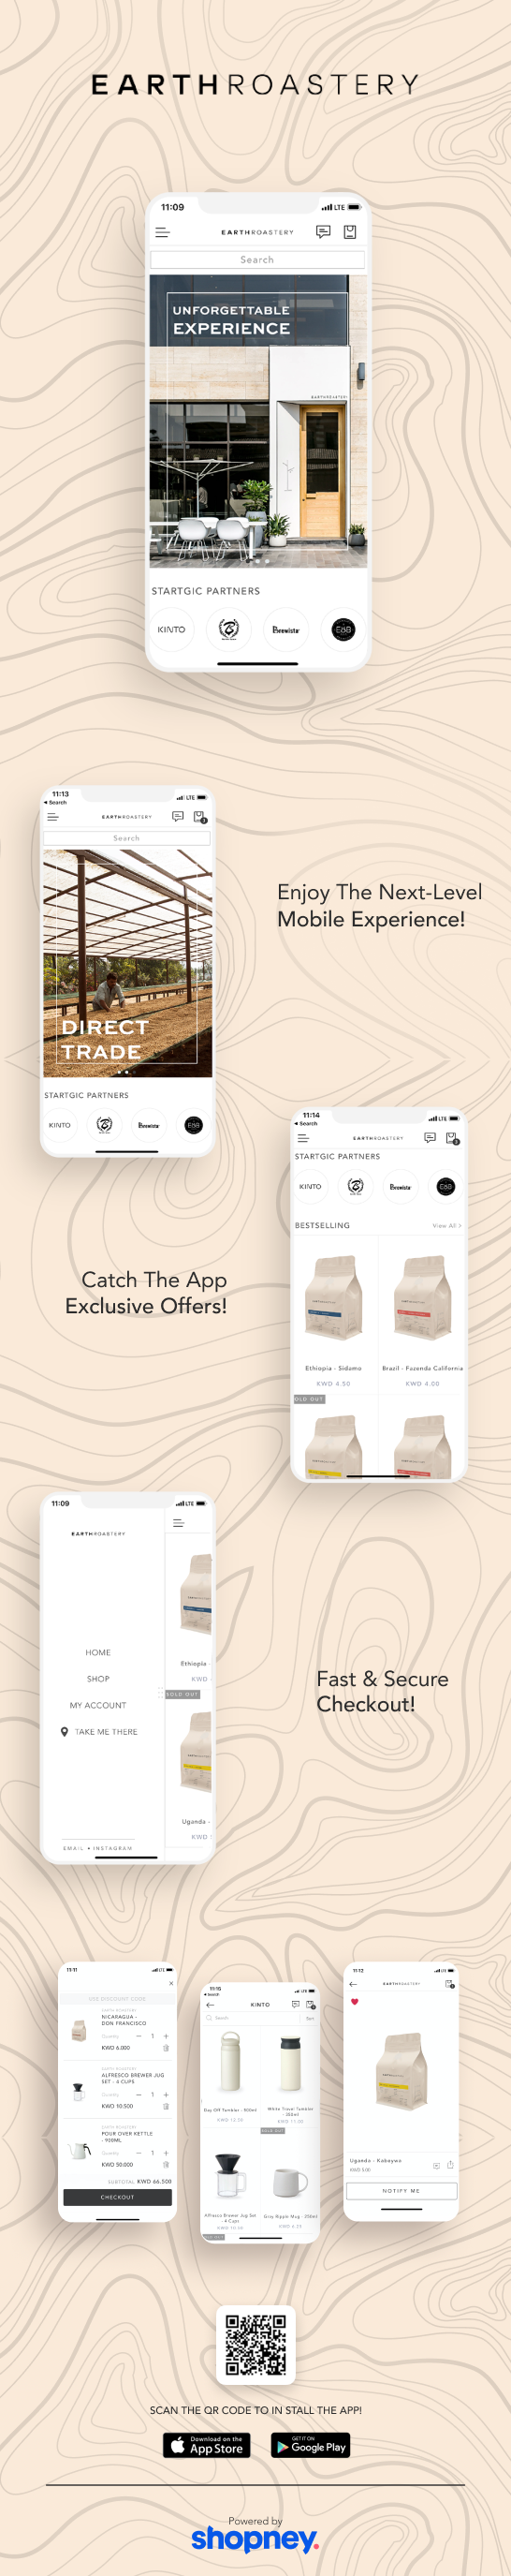 the mobile app design of Earth Roastery app